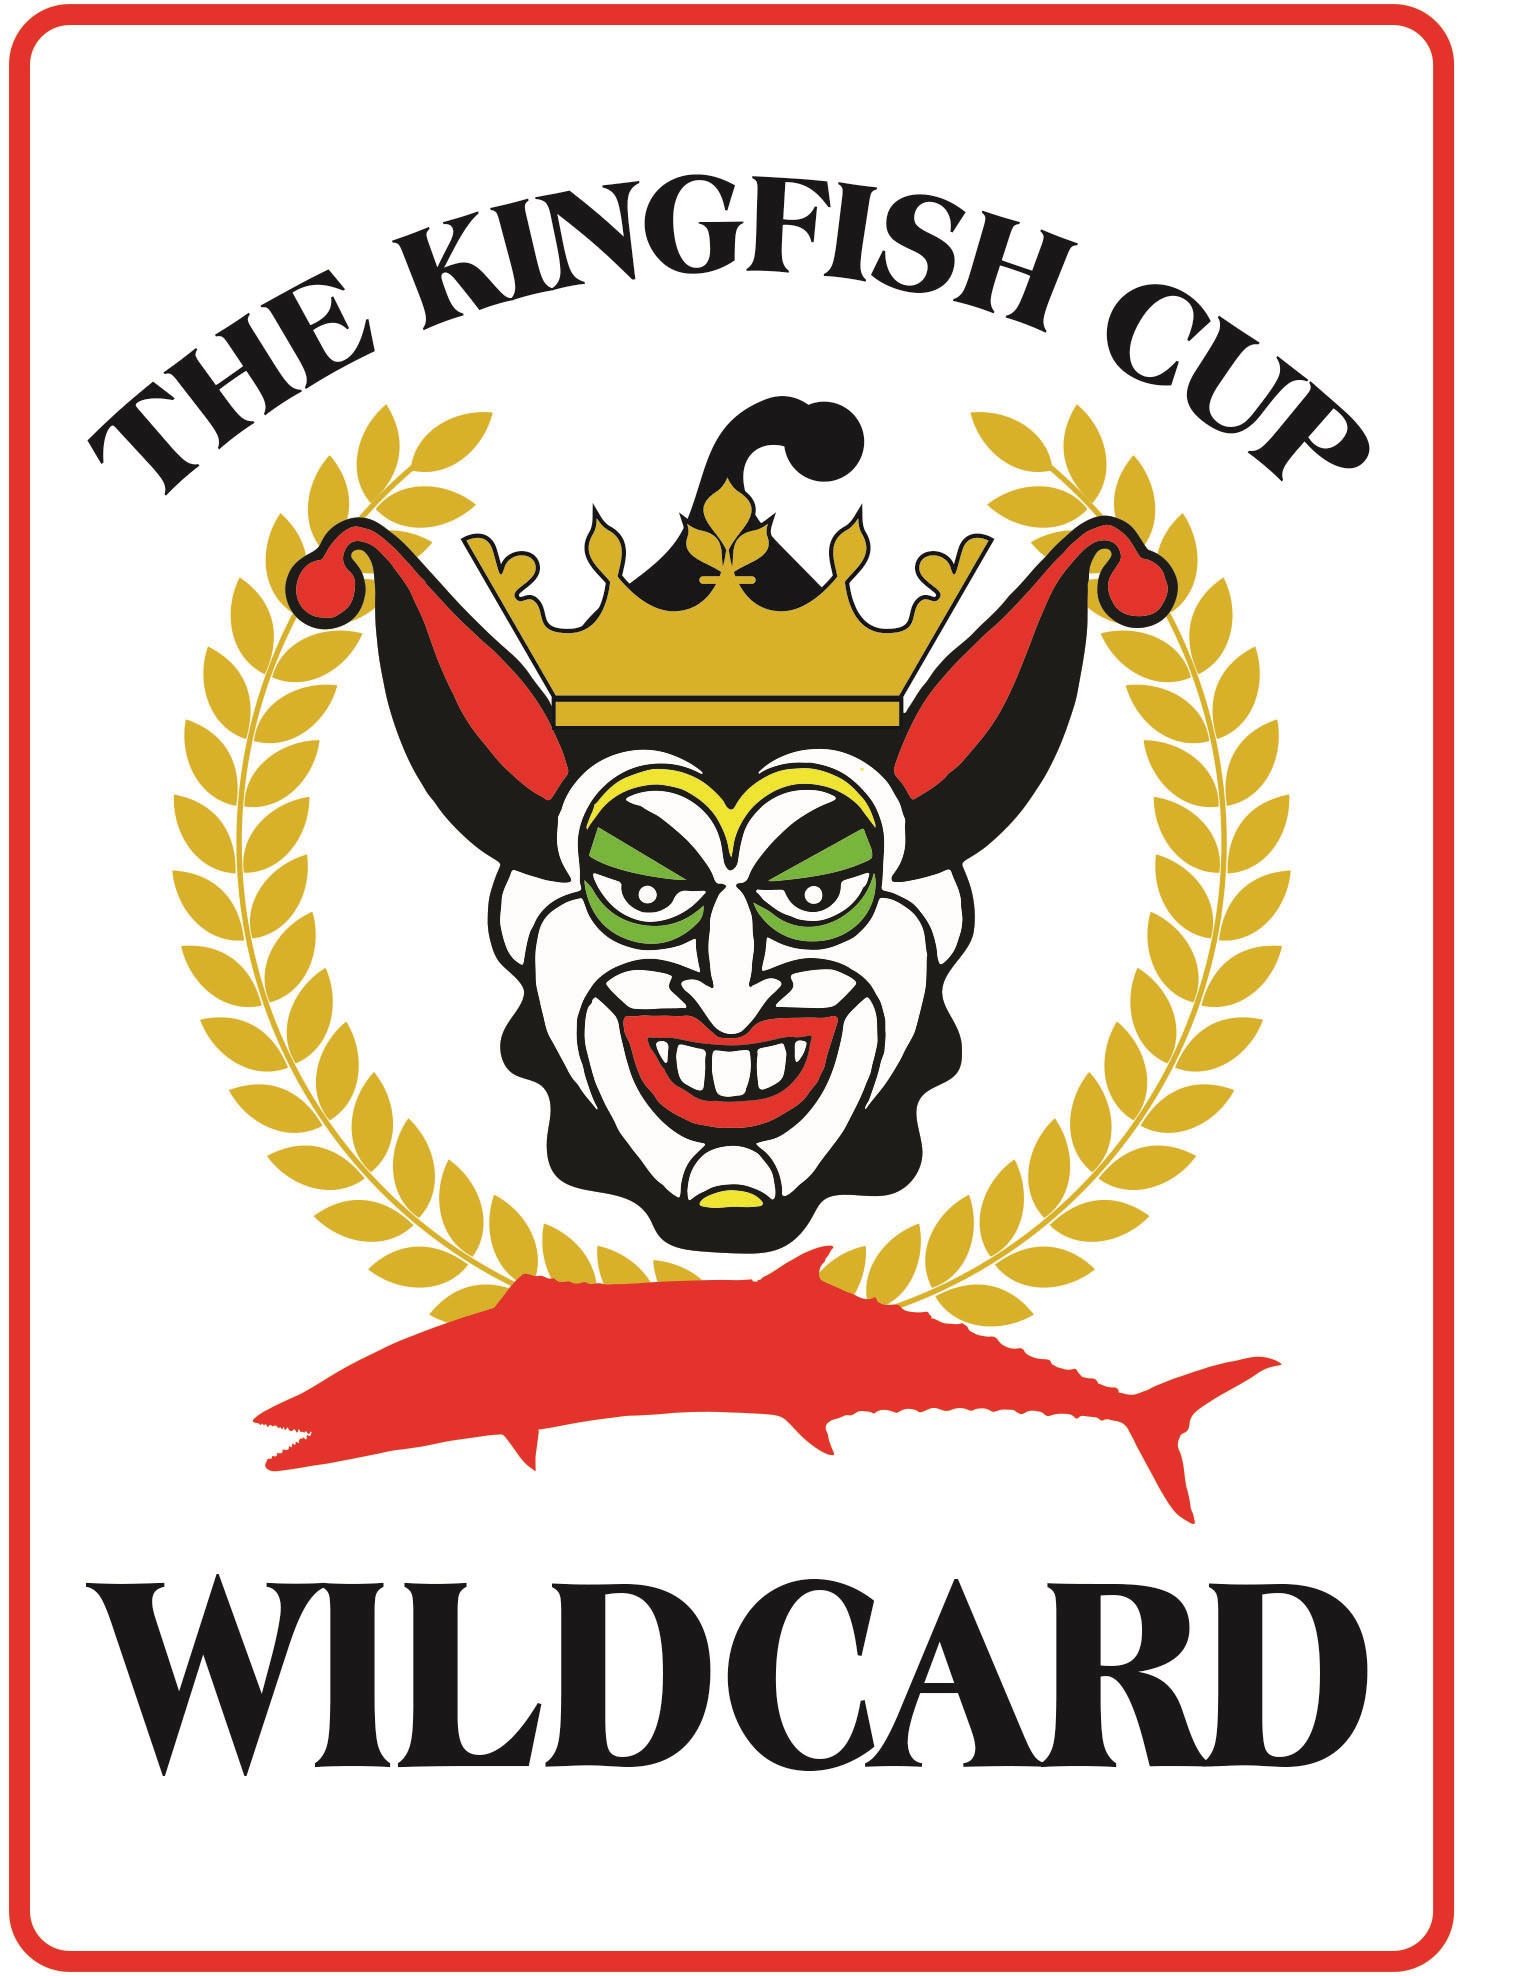 Kingfish Cup Wildcard